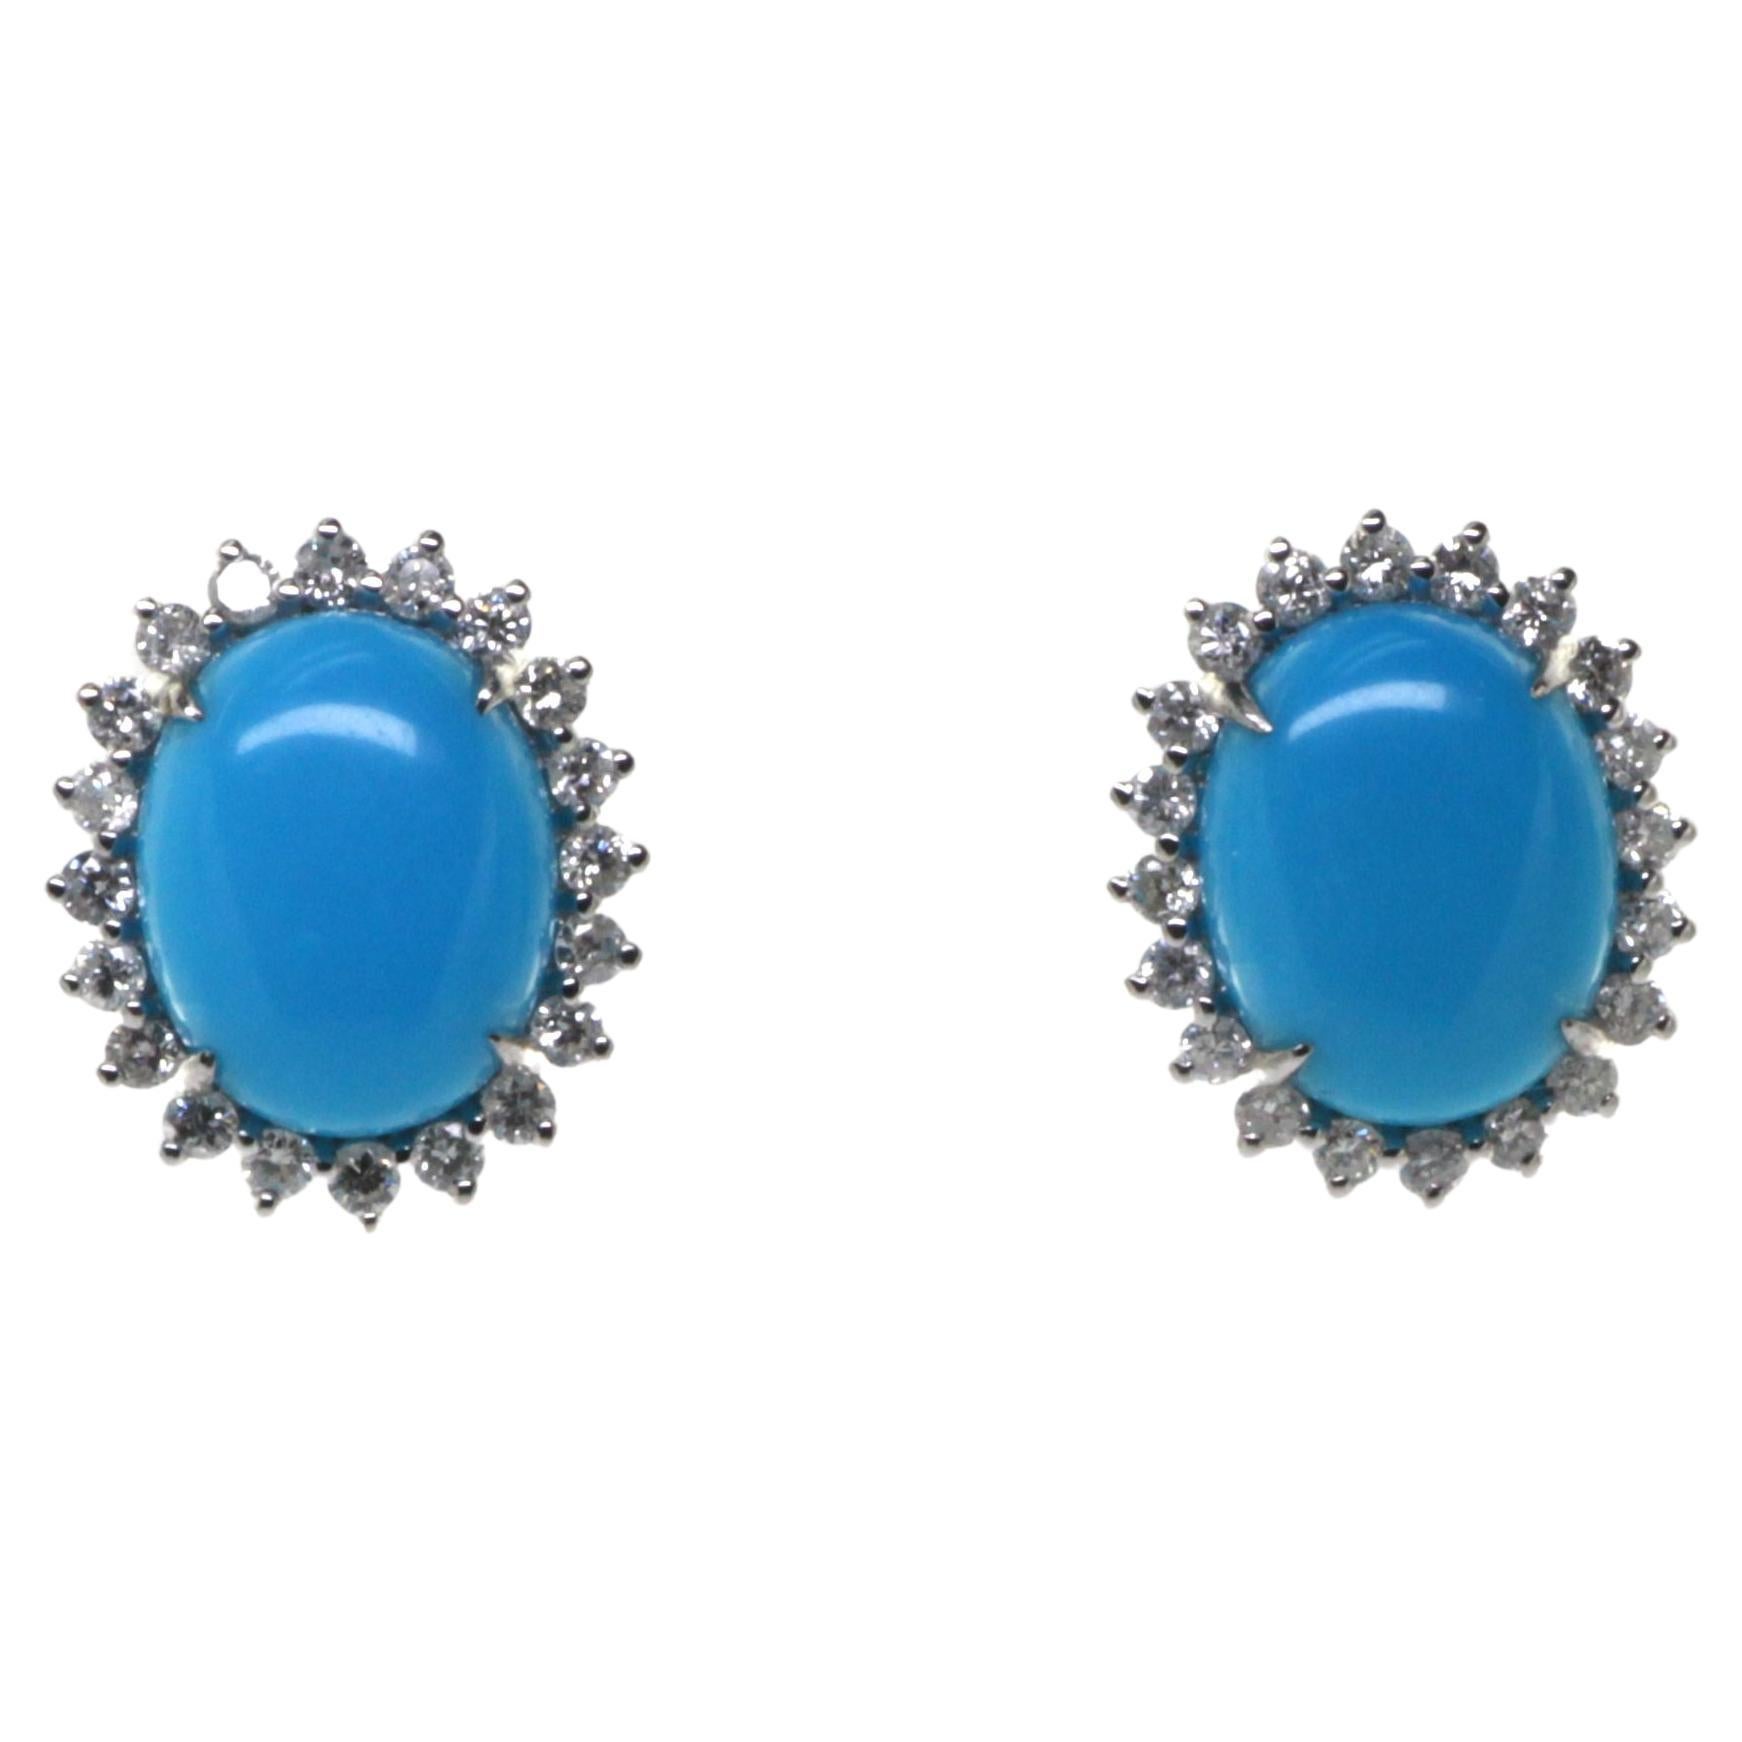 Turquoise Diamond Stud Earrings in 14 Karat White Gold